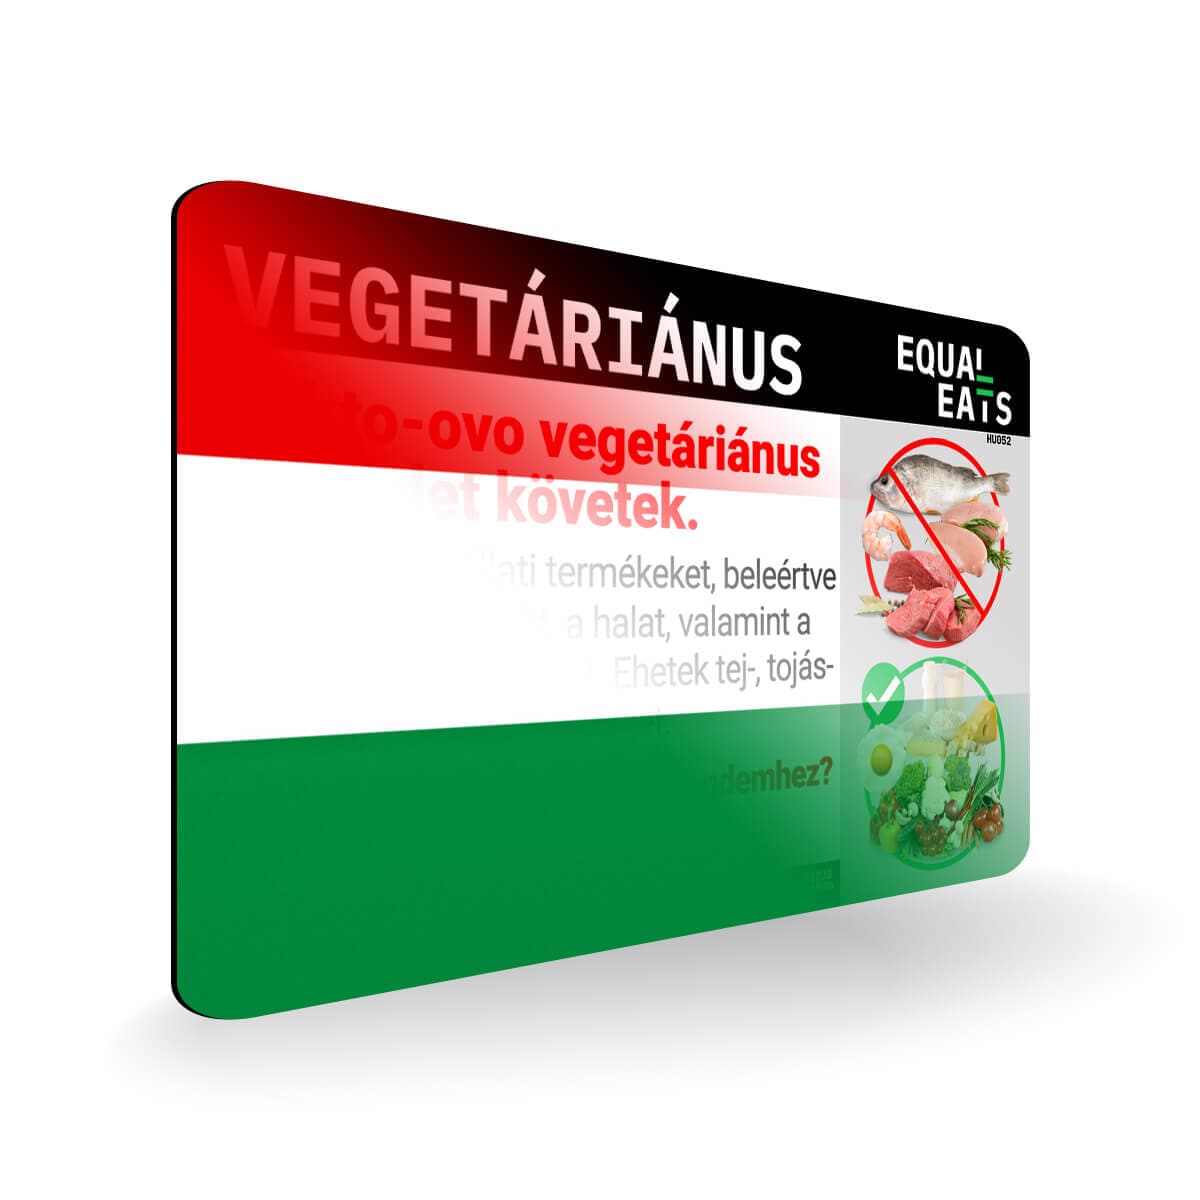 Lacto Ovo Vegetarian Diet in Hungarian. Vegetarian Card for Hungary